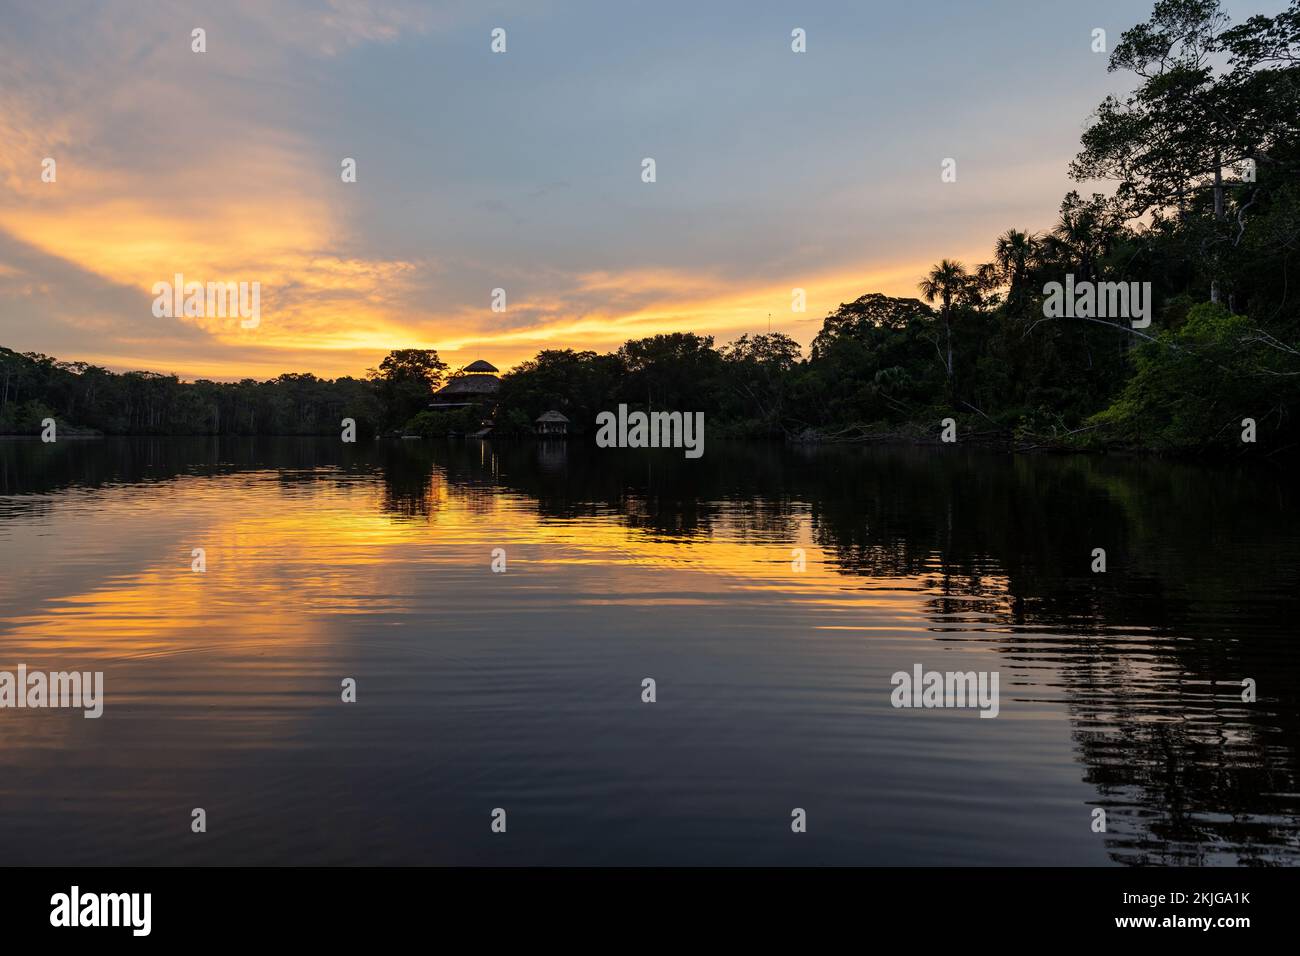 Amazon rainforest at sunset, Garzacocha lagoon, Yasuni national park, Amazon river basin, Ecuador. Stock Photo